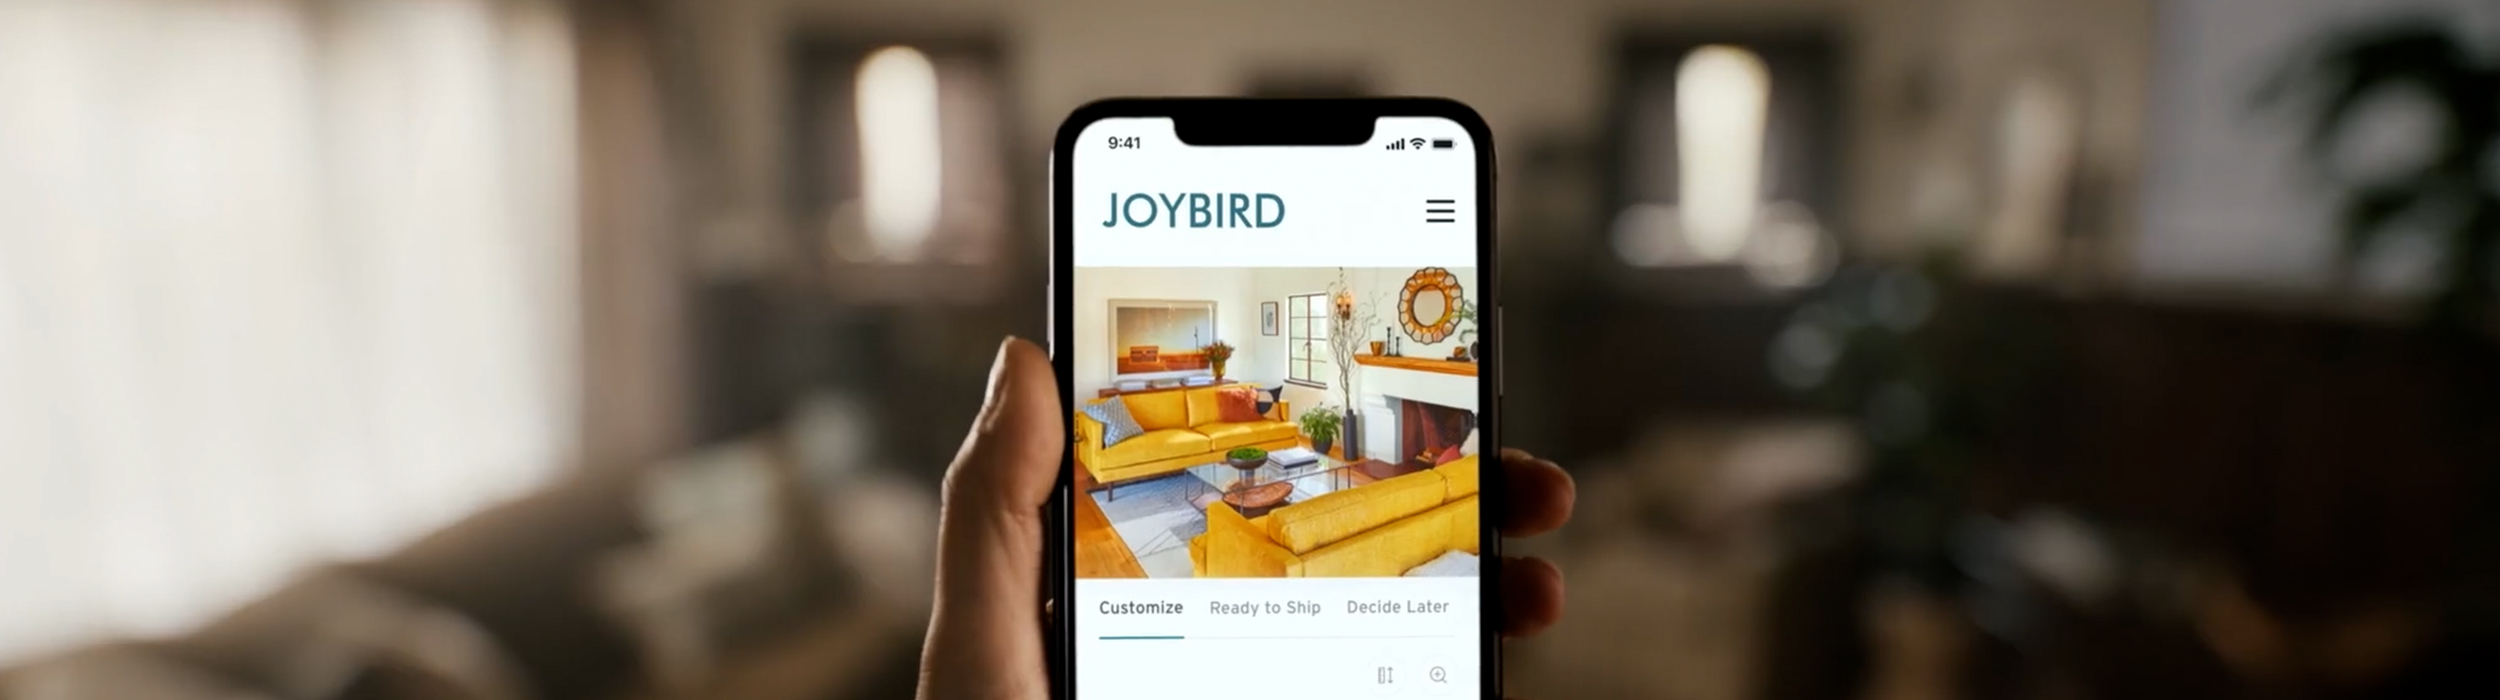 Joybird Airs First TV Campaign